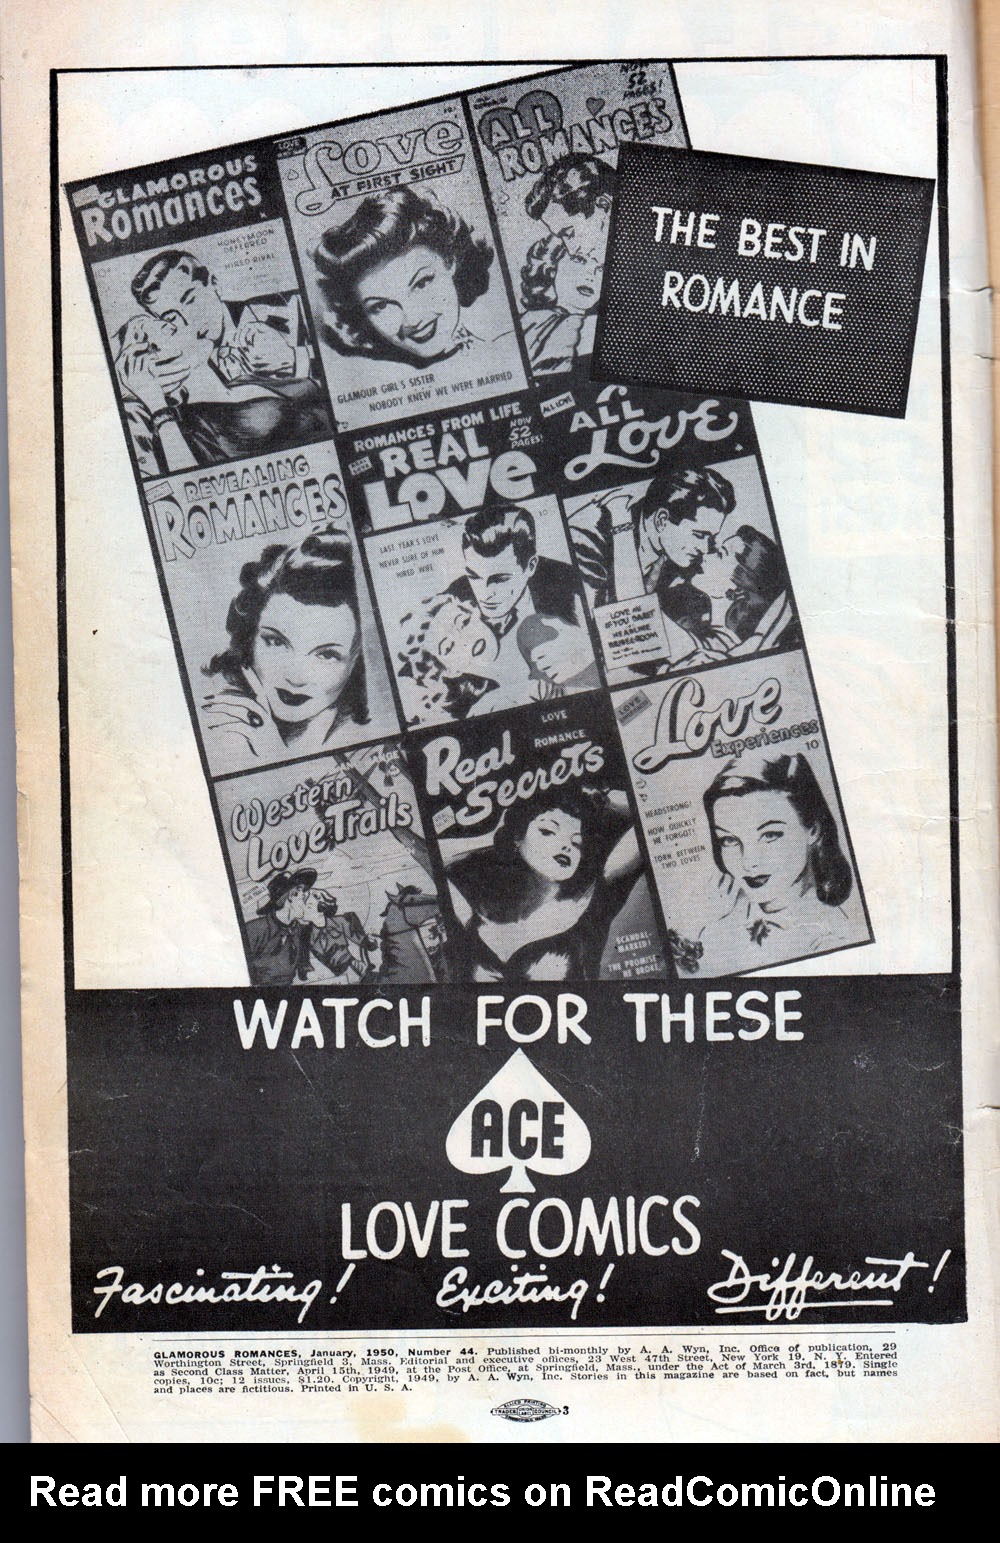 Read online Glamorous Romances comic -  Issue #44 - 2